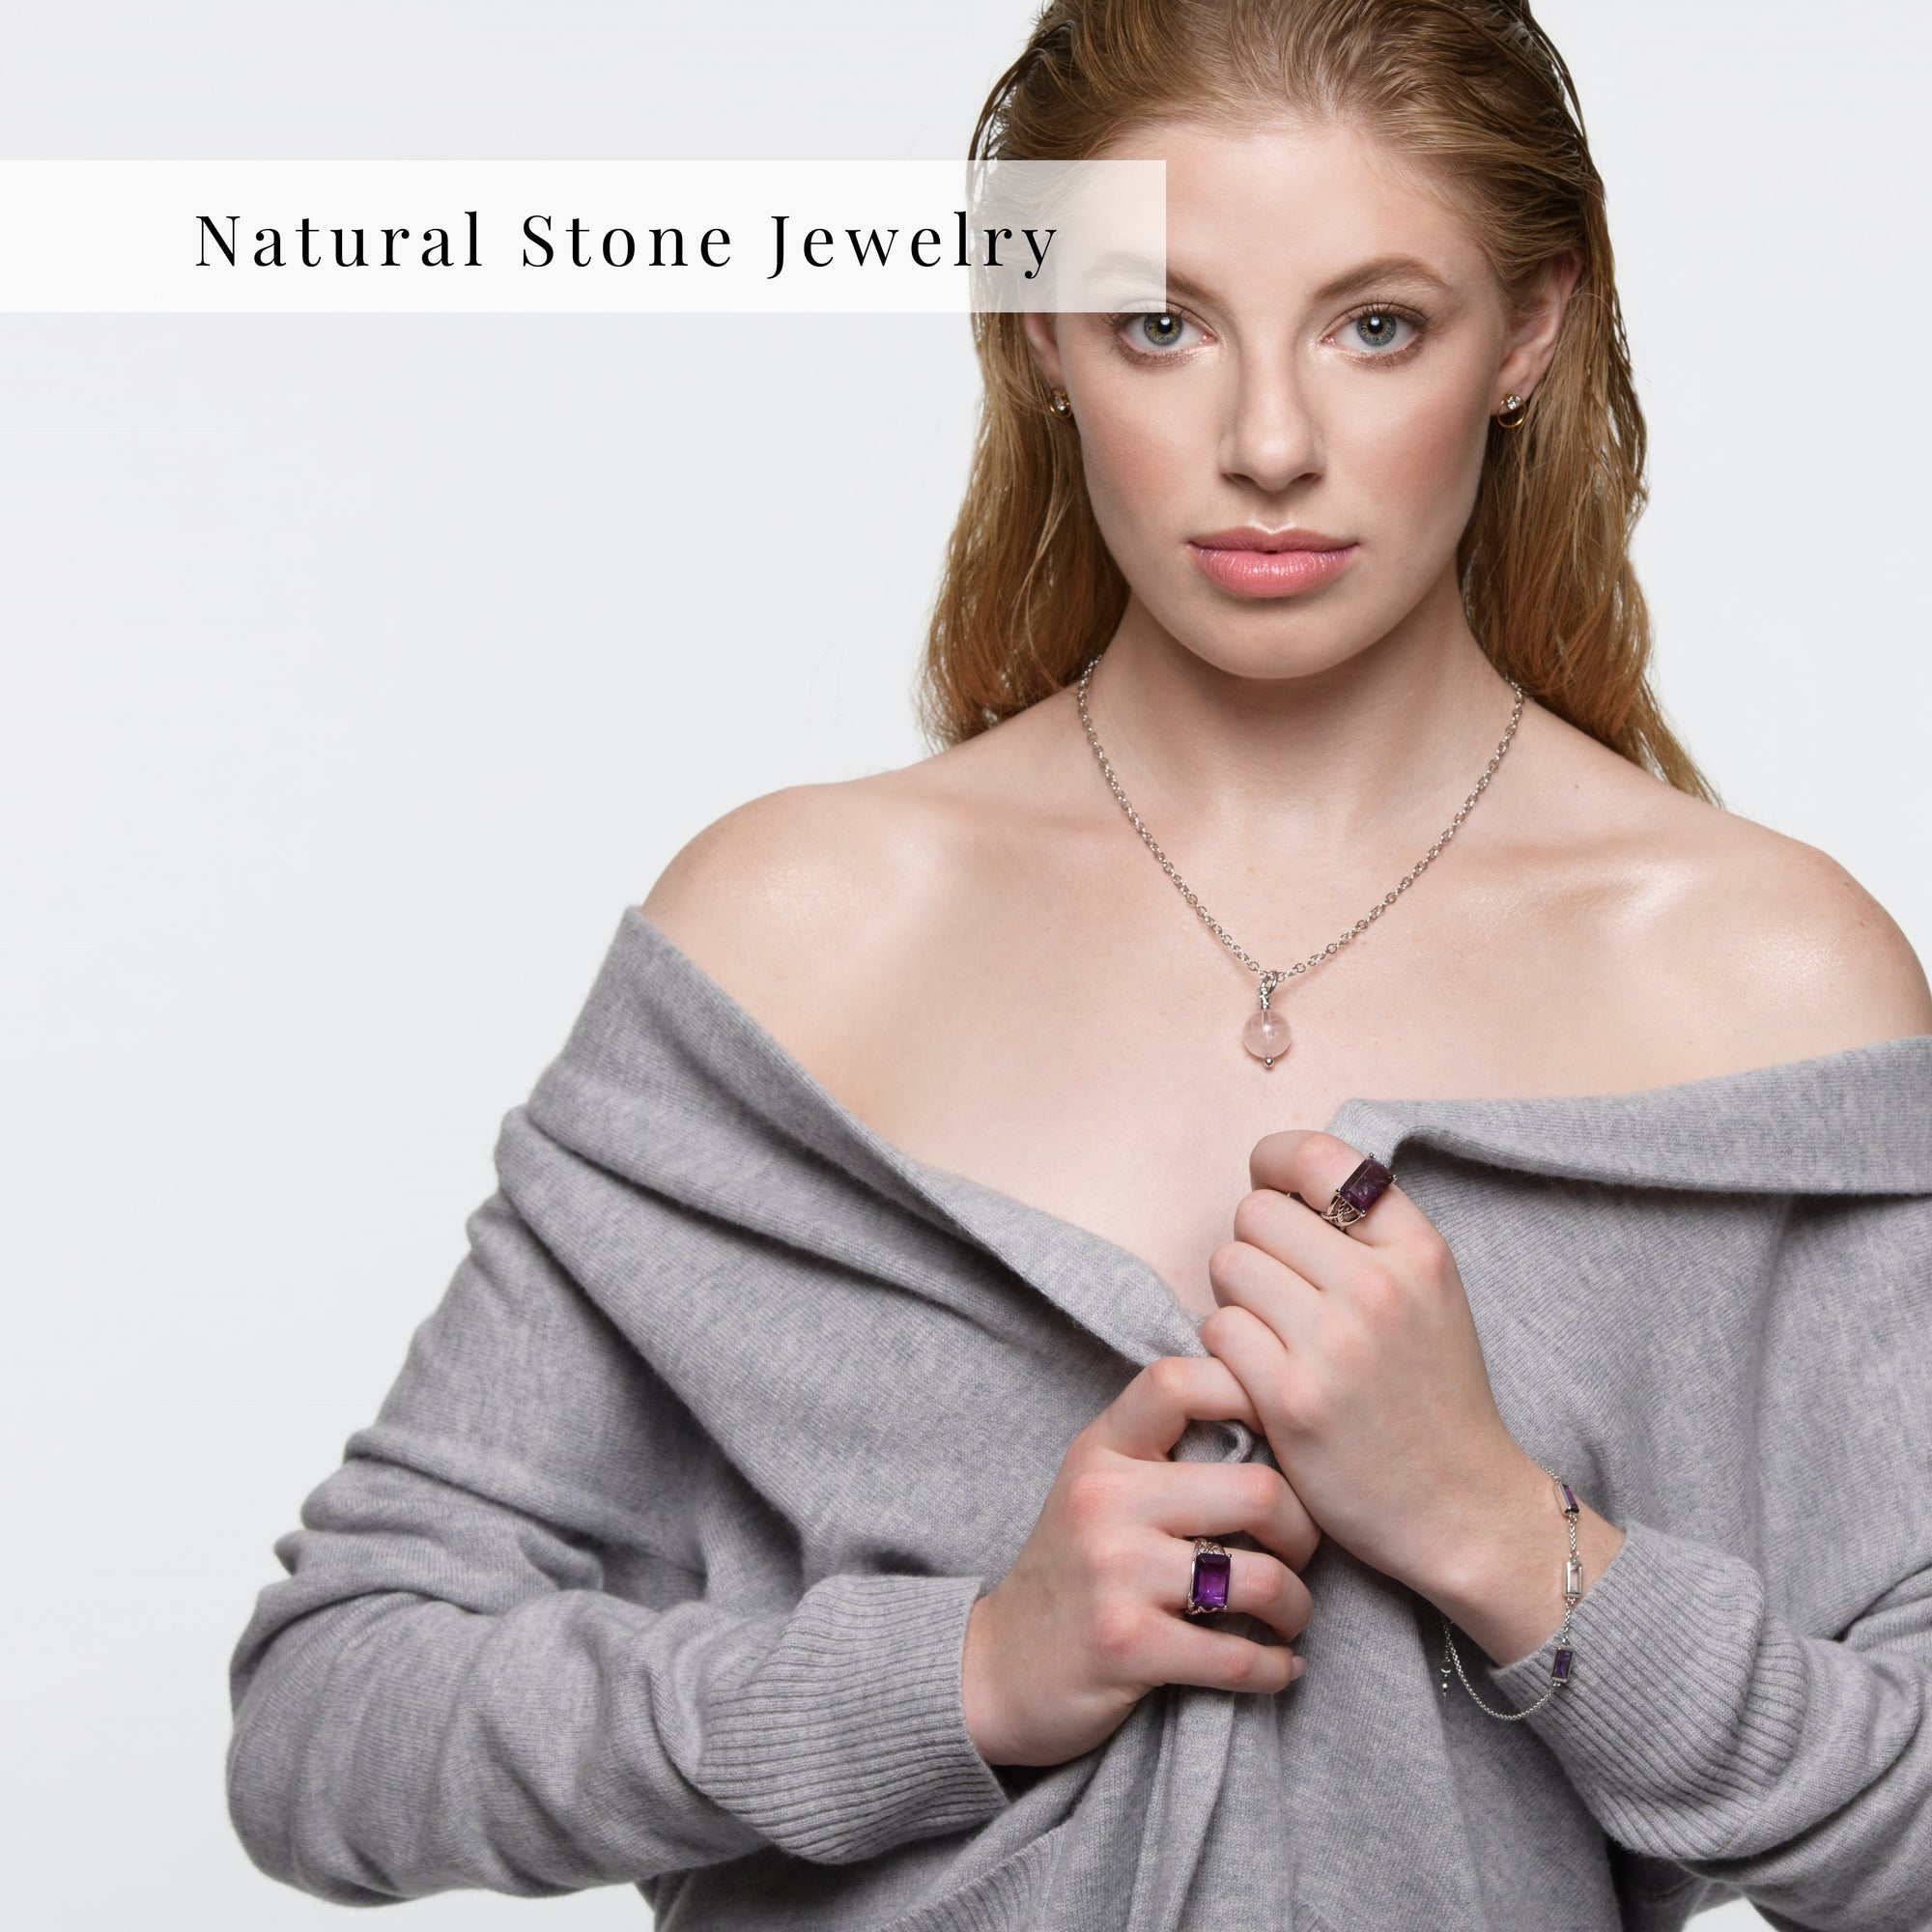 Natural Stone Jewelry | C.J.ROCKER